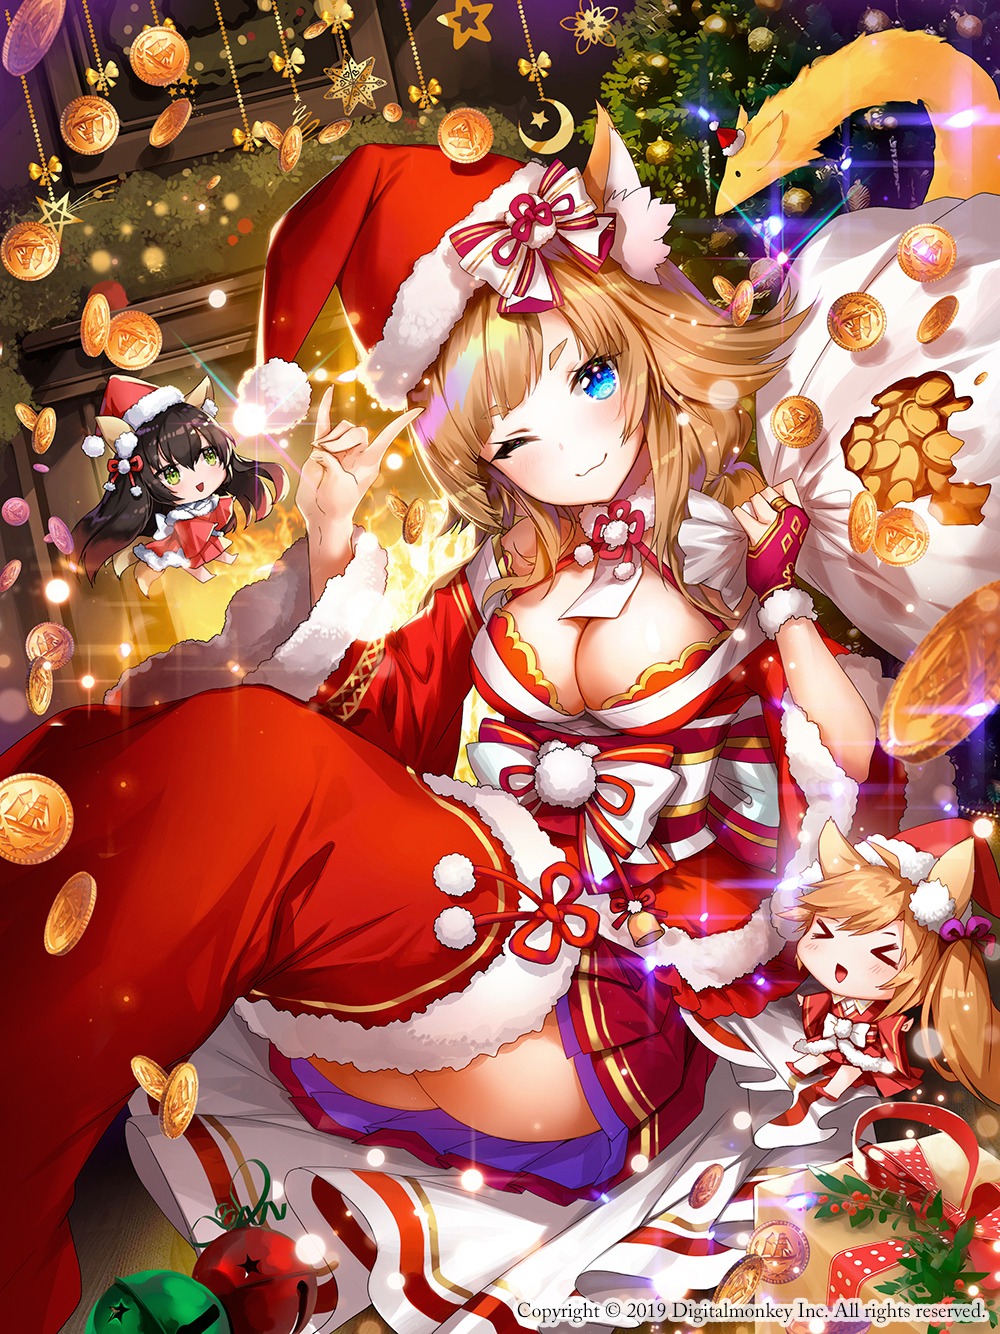 Anime 1000x1334 anime anime girls digital art artwork 2D portrait display cleavage blue eyes blonde Christmas Santa hats Santa girl animal ears Apple a Caramel